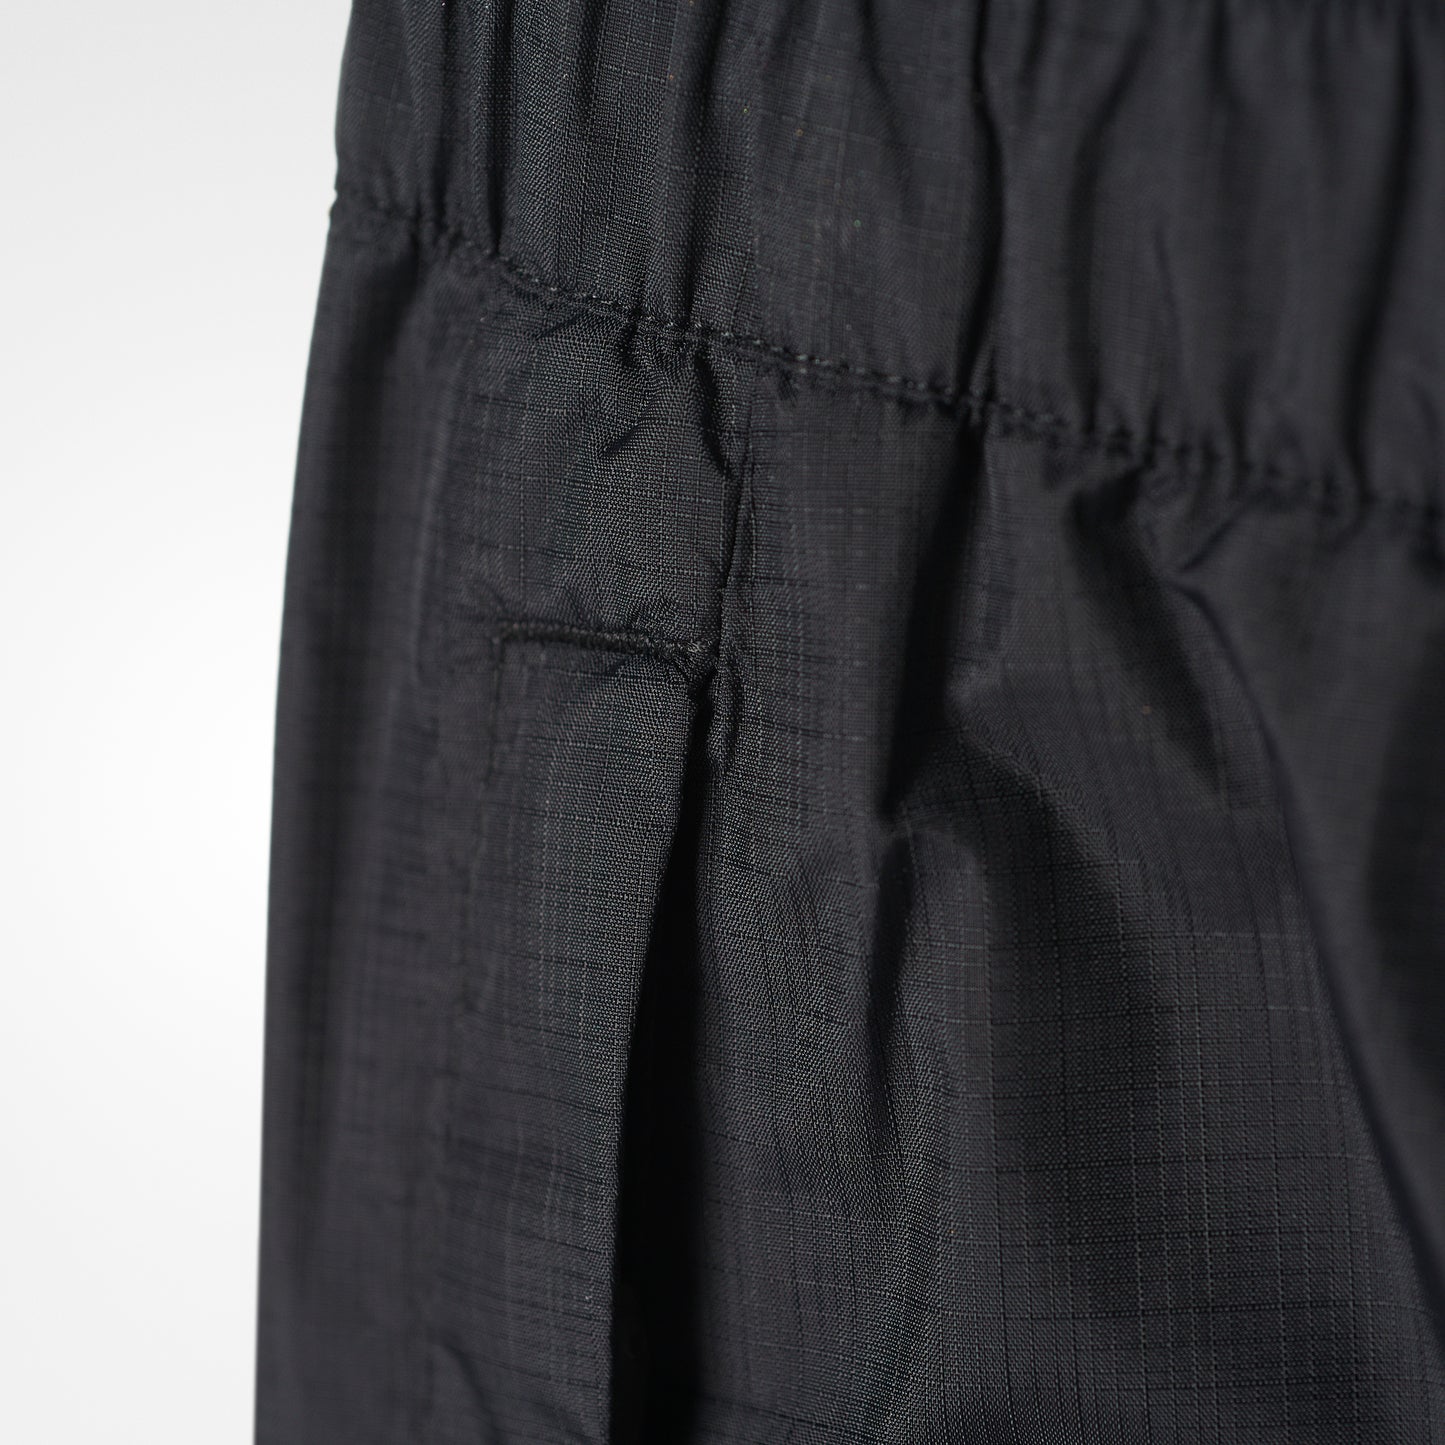 adidas CLIMAPROOF 2.5 LAYER Wandertag Track Pants | Black | Men's